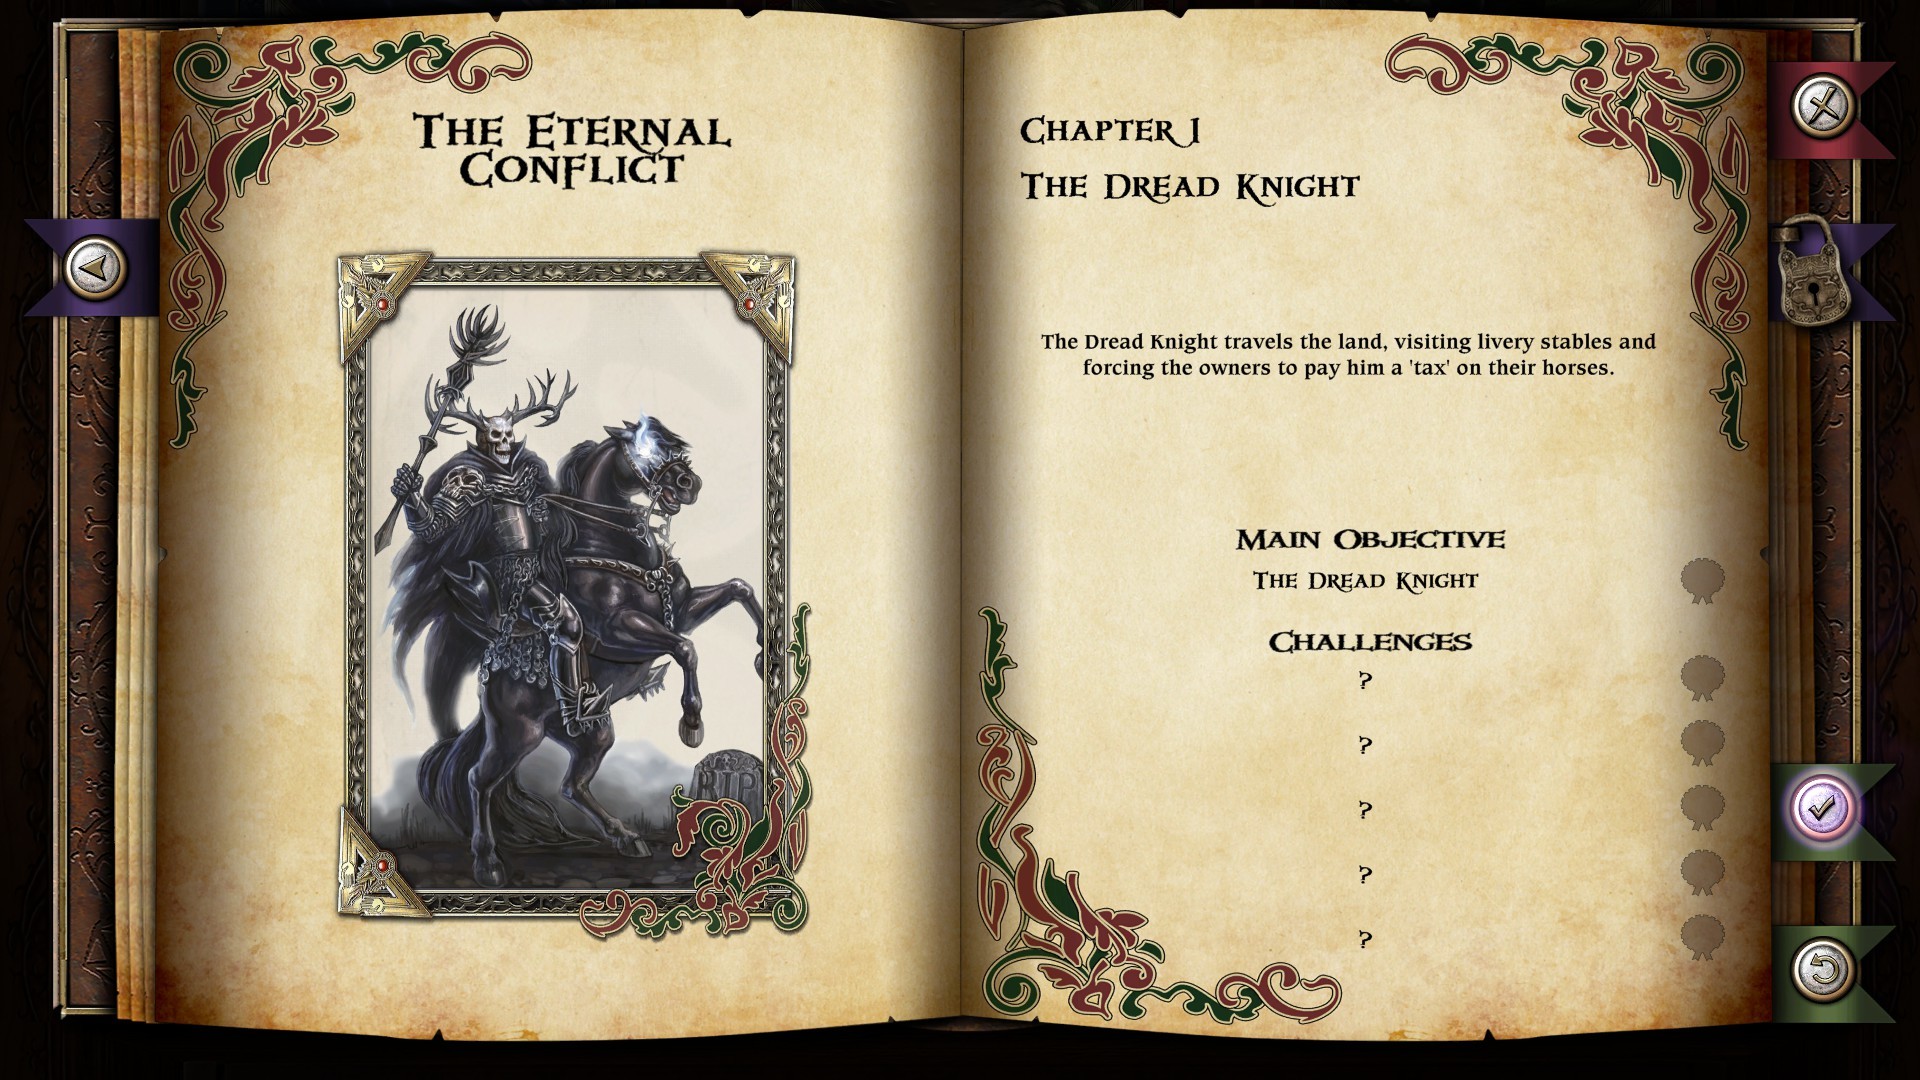 [$ 1.63] Talisman: Origins - The Eternal Conflict DLC Steam CD Key